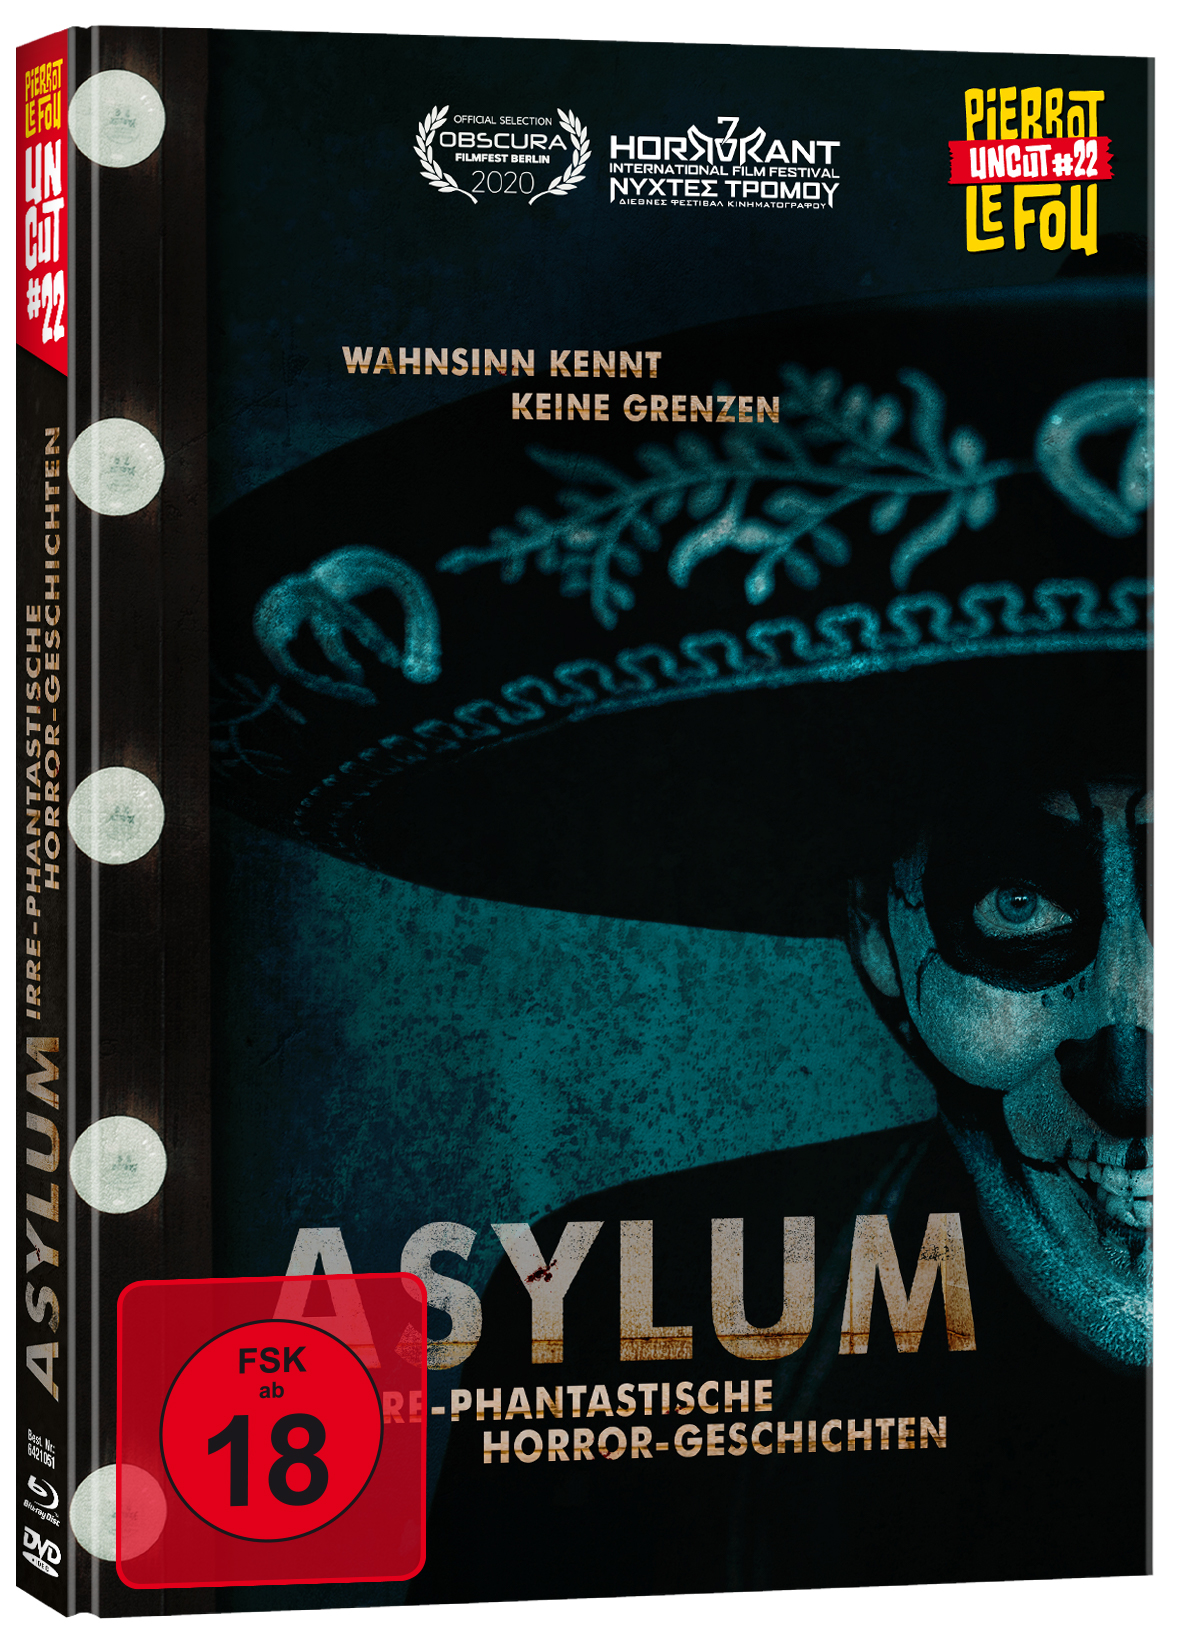 Asylum - Irre-phantastische Horror-Geschichten - Limited Edition Mediabook (uncut) (Blu-ray + DVD) - Cover C